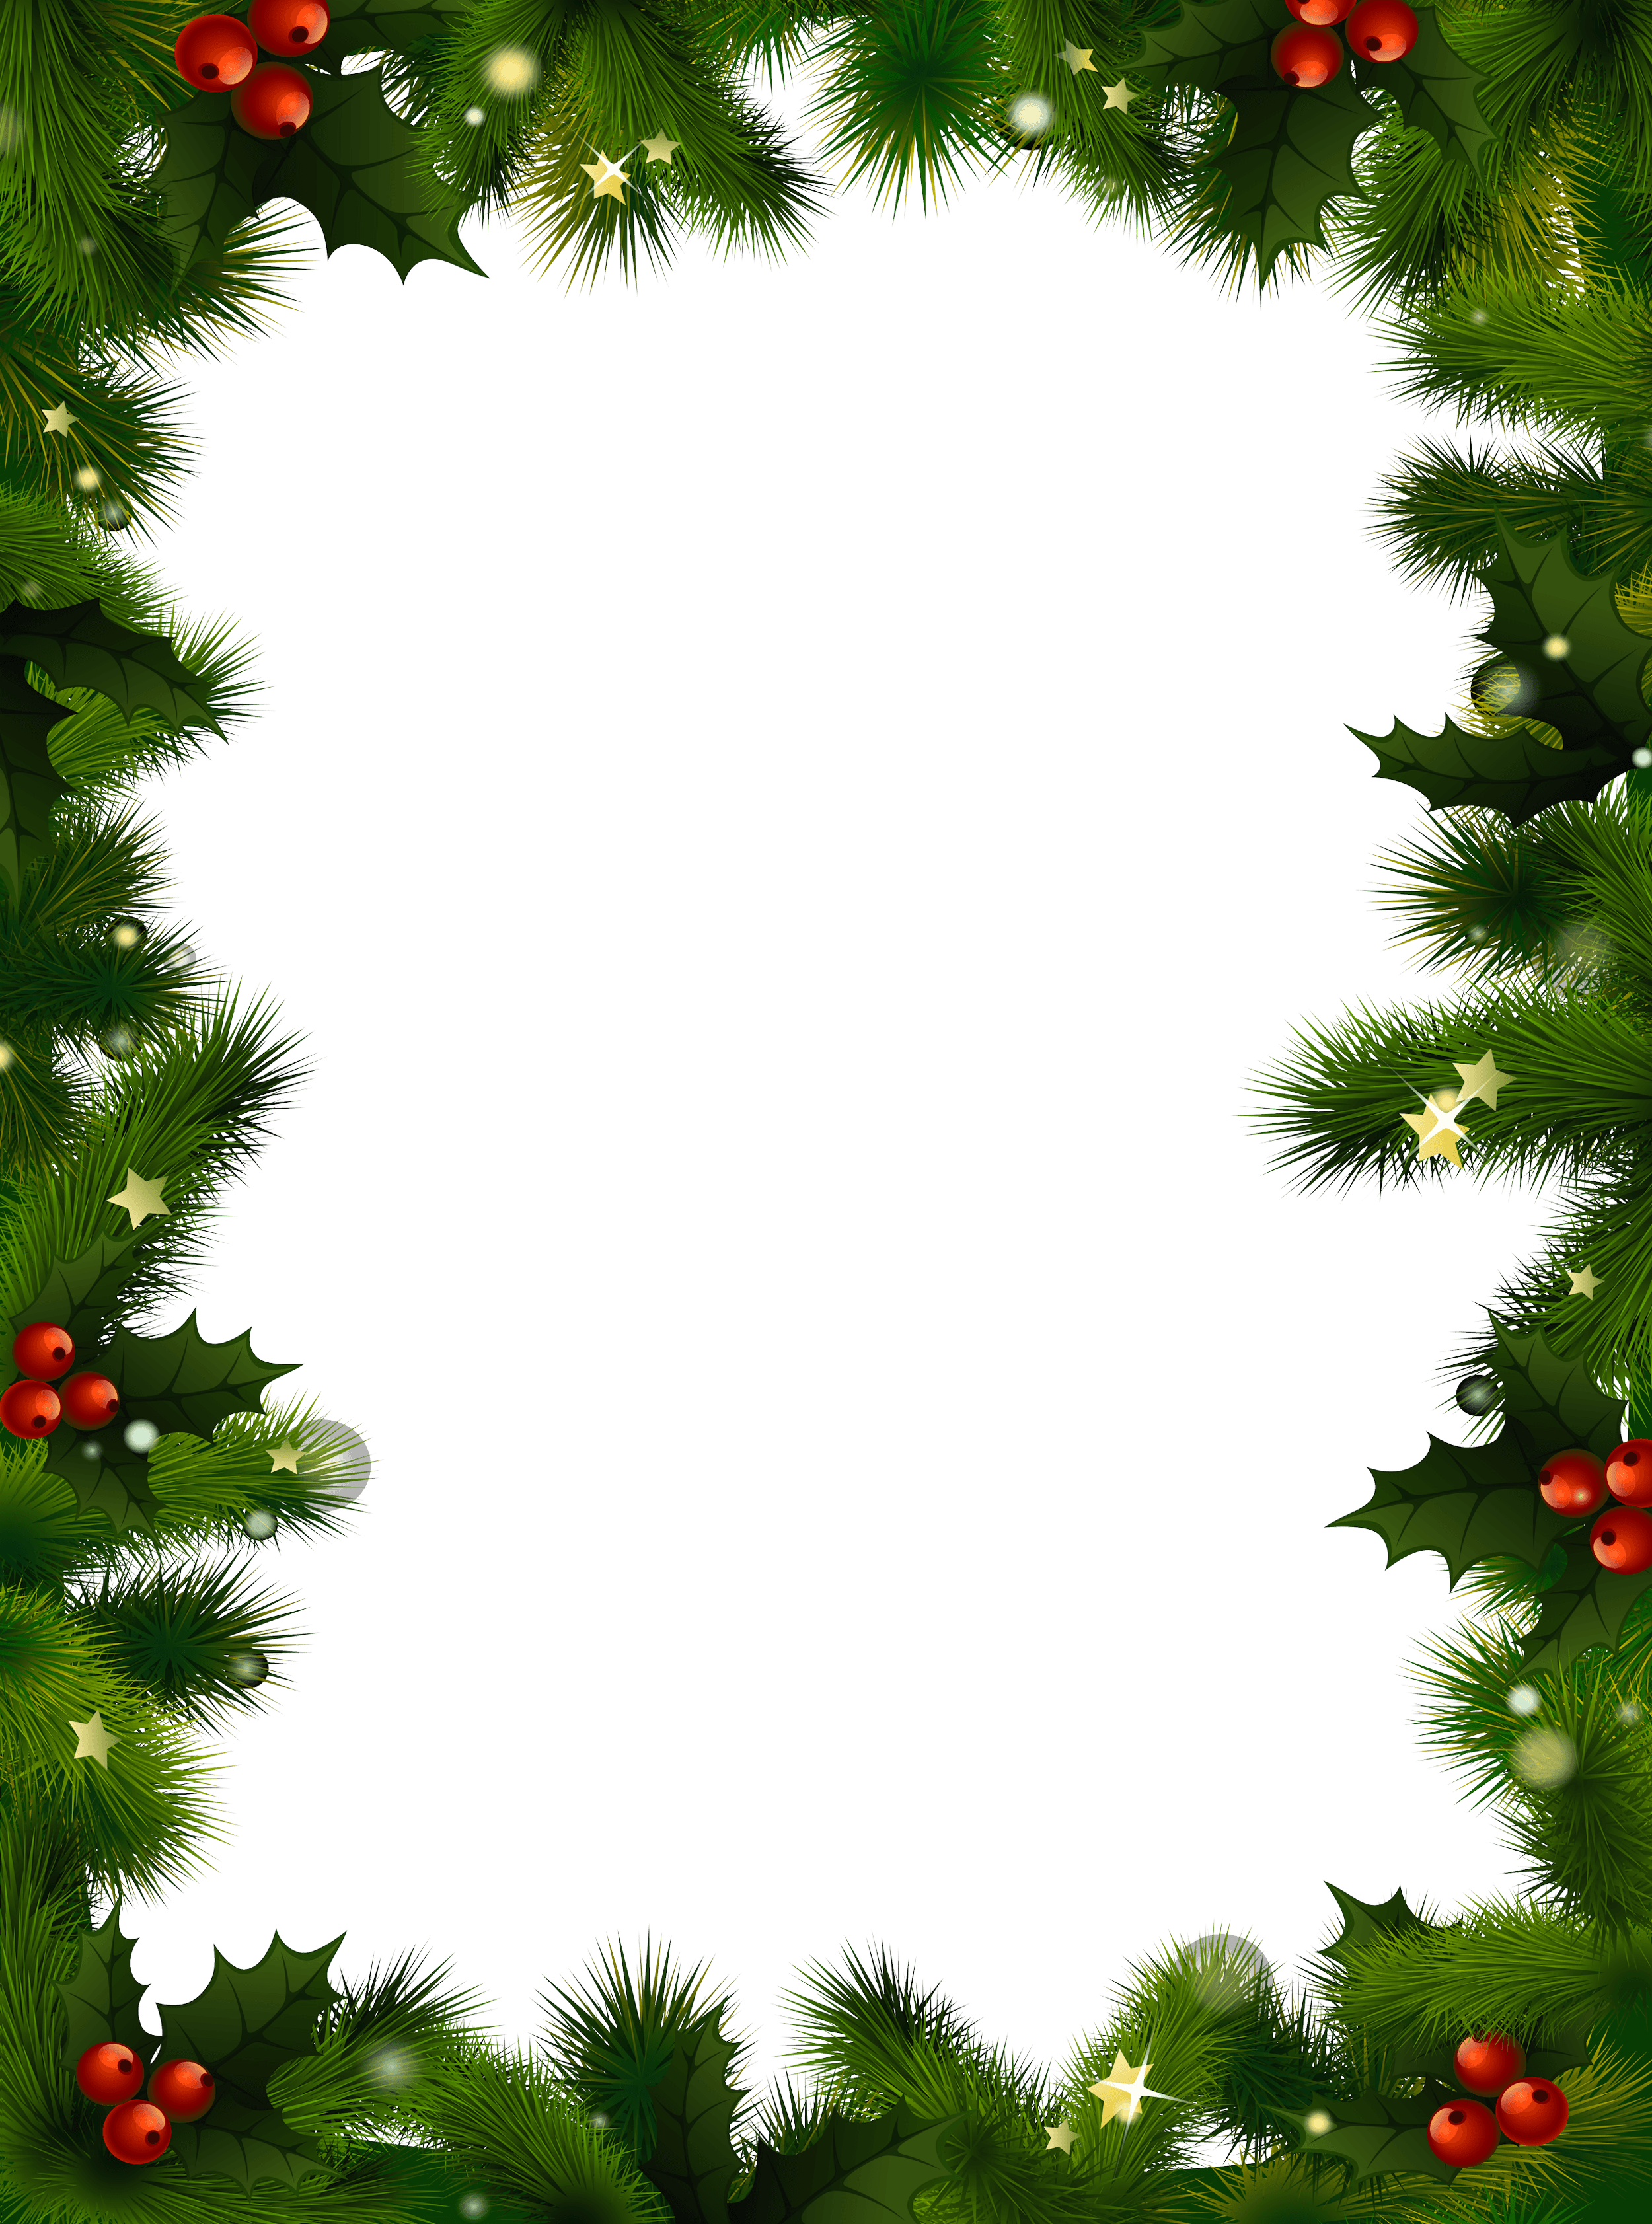 Transparent Christmas Photo Frame with Pine and Mistletoe